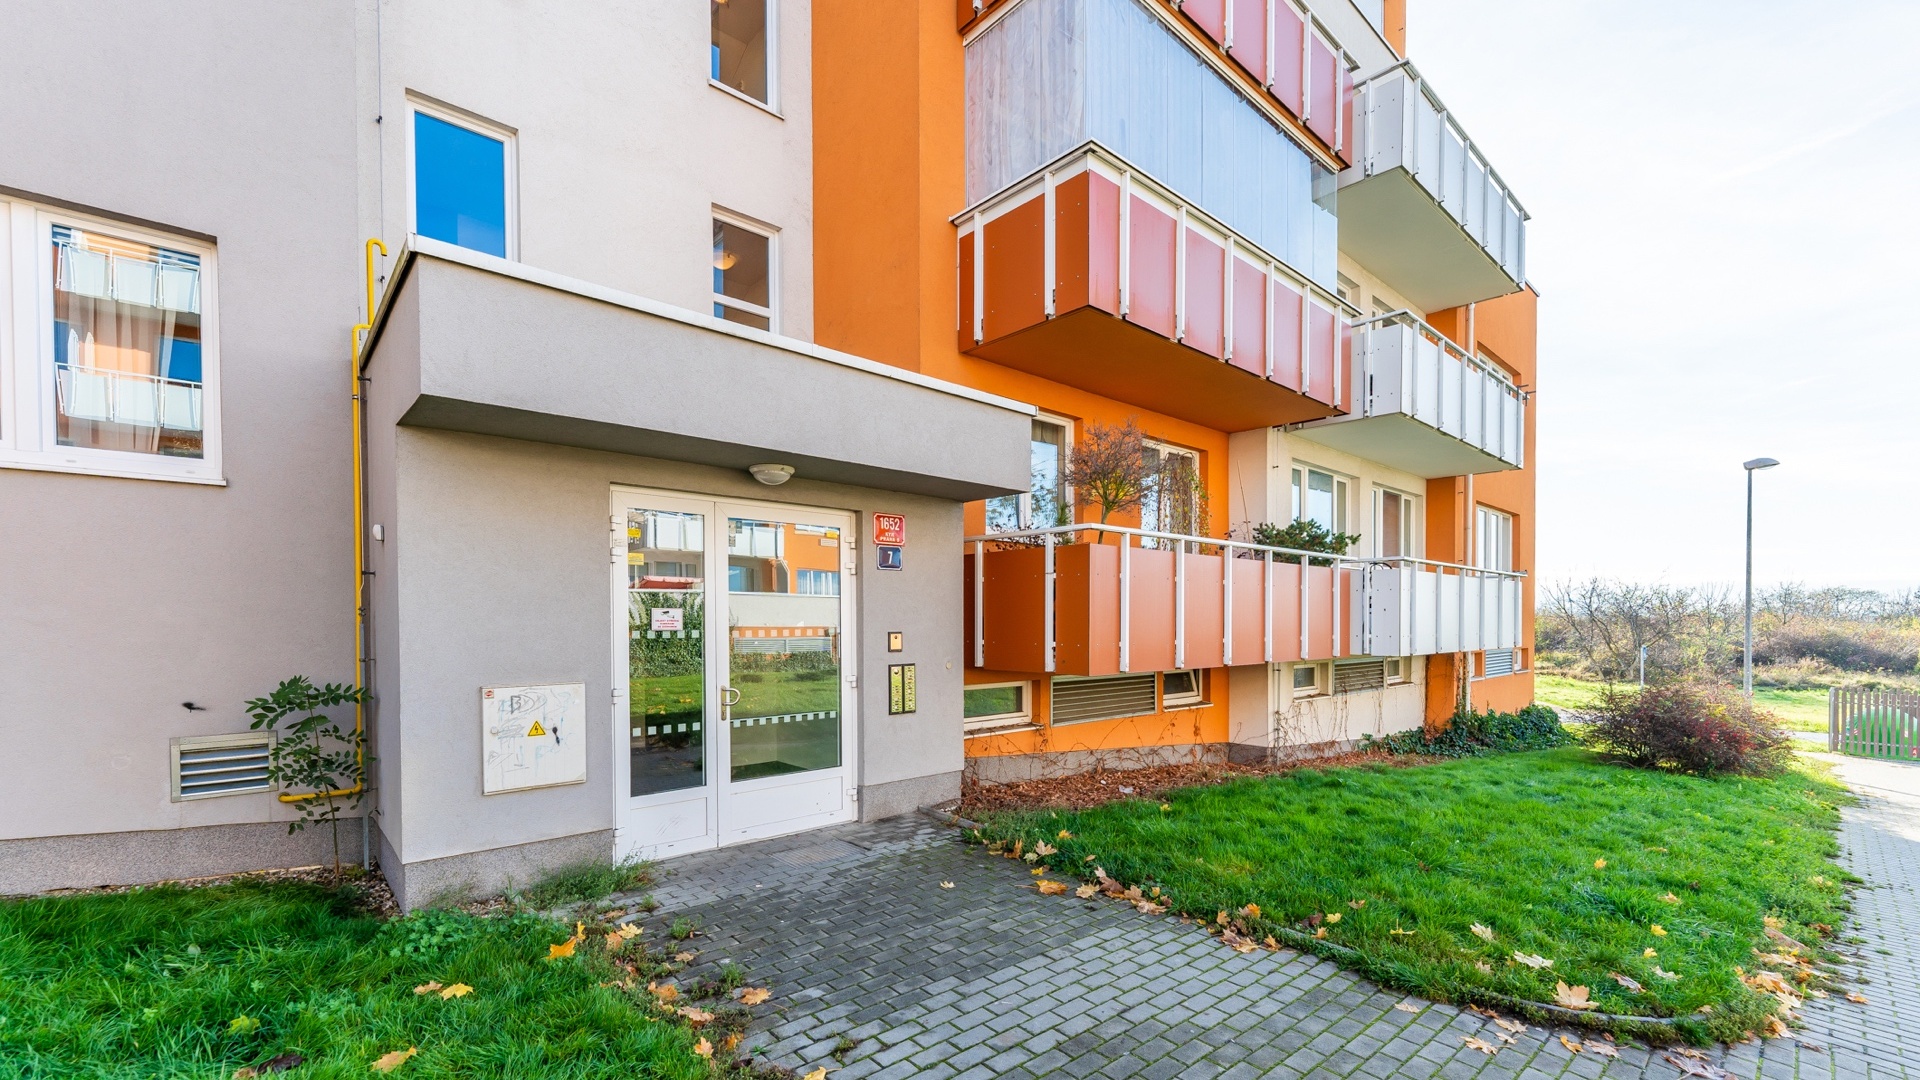 Pronájem bytu 1+kk 31 m² + balkon 8 m² v novostavbě, ulice Sicherova, Praha